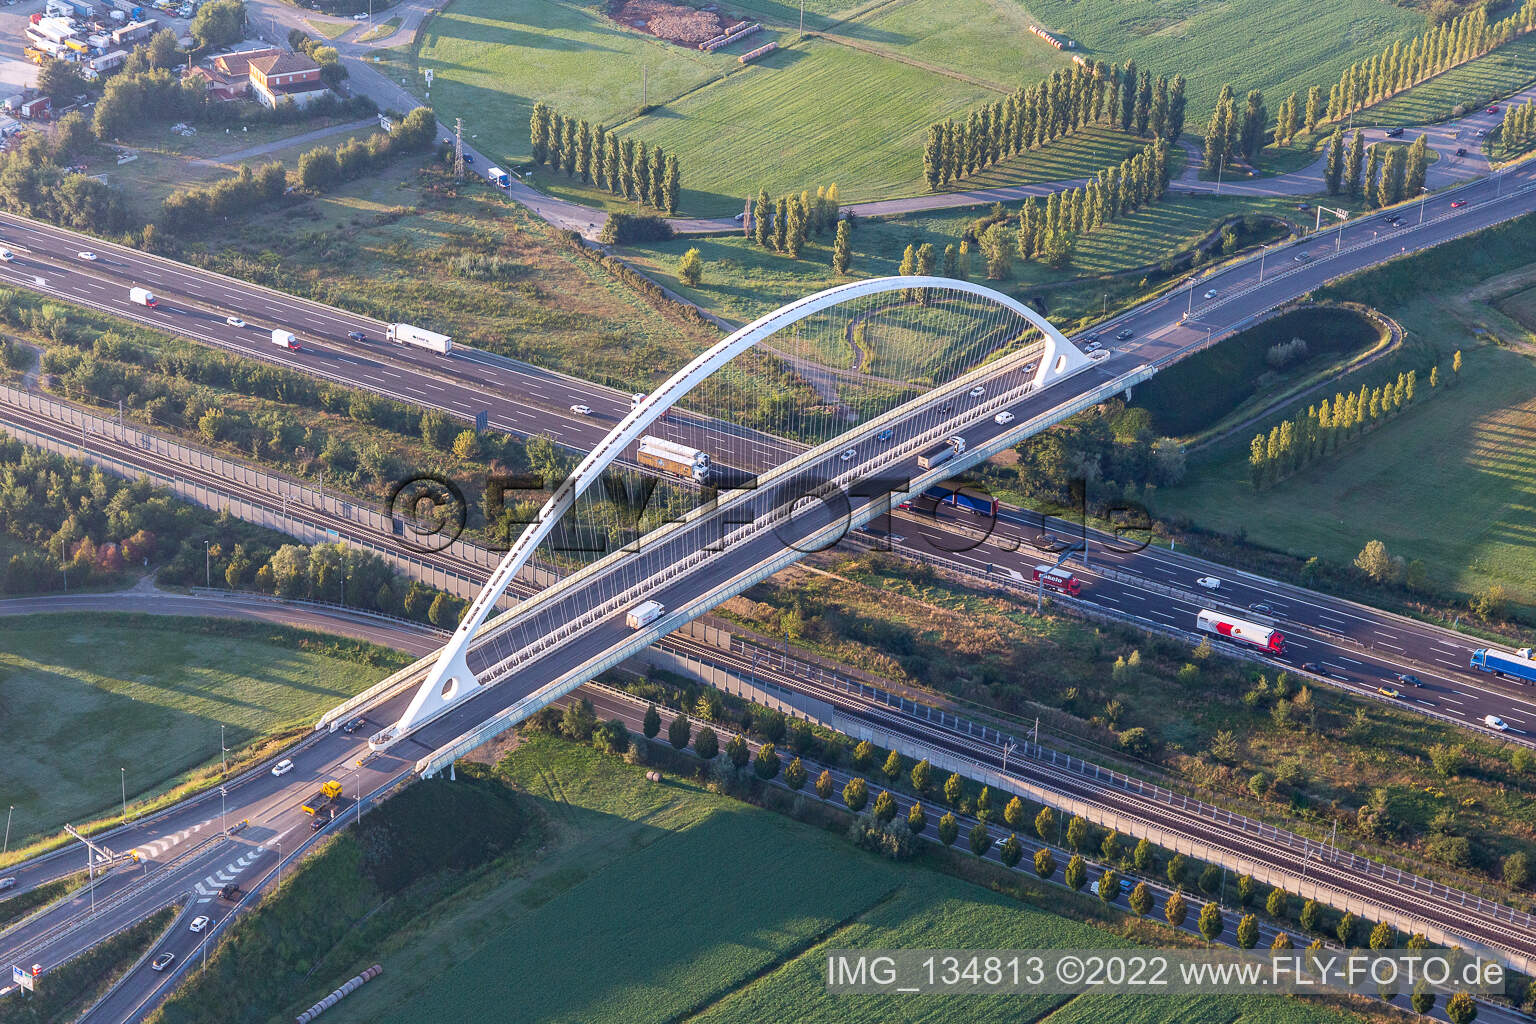 Luftbild von Brücke Ponte Di Calatrava,  über die Schnellbahntrasse und Autostrada del Sole in Reggio nell’Emilia im Bundesland Reggio Emilia, Italien